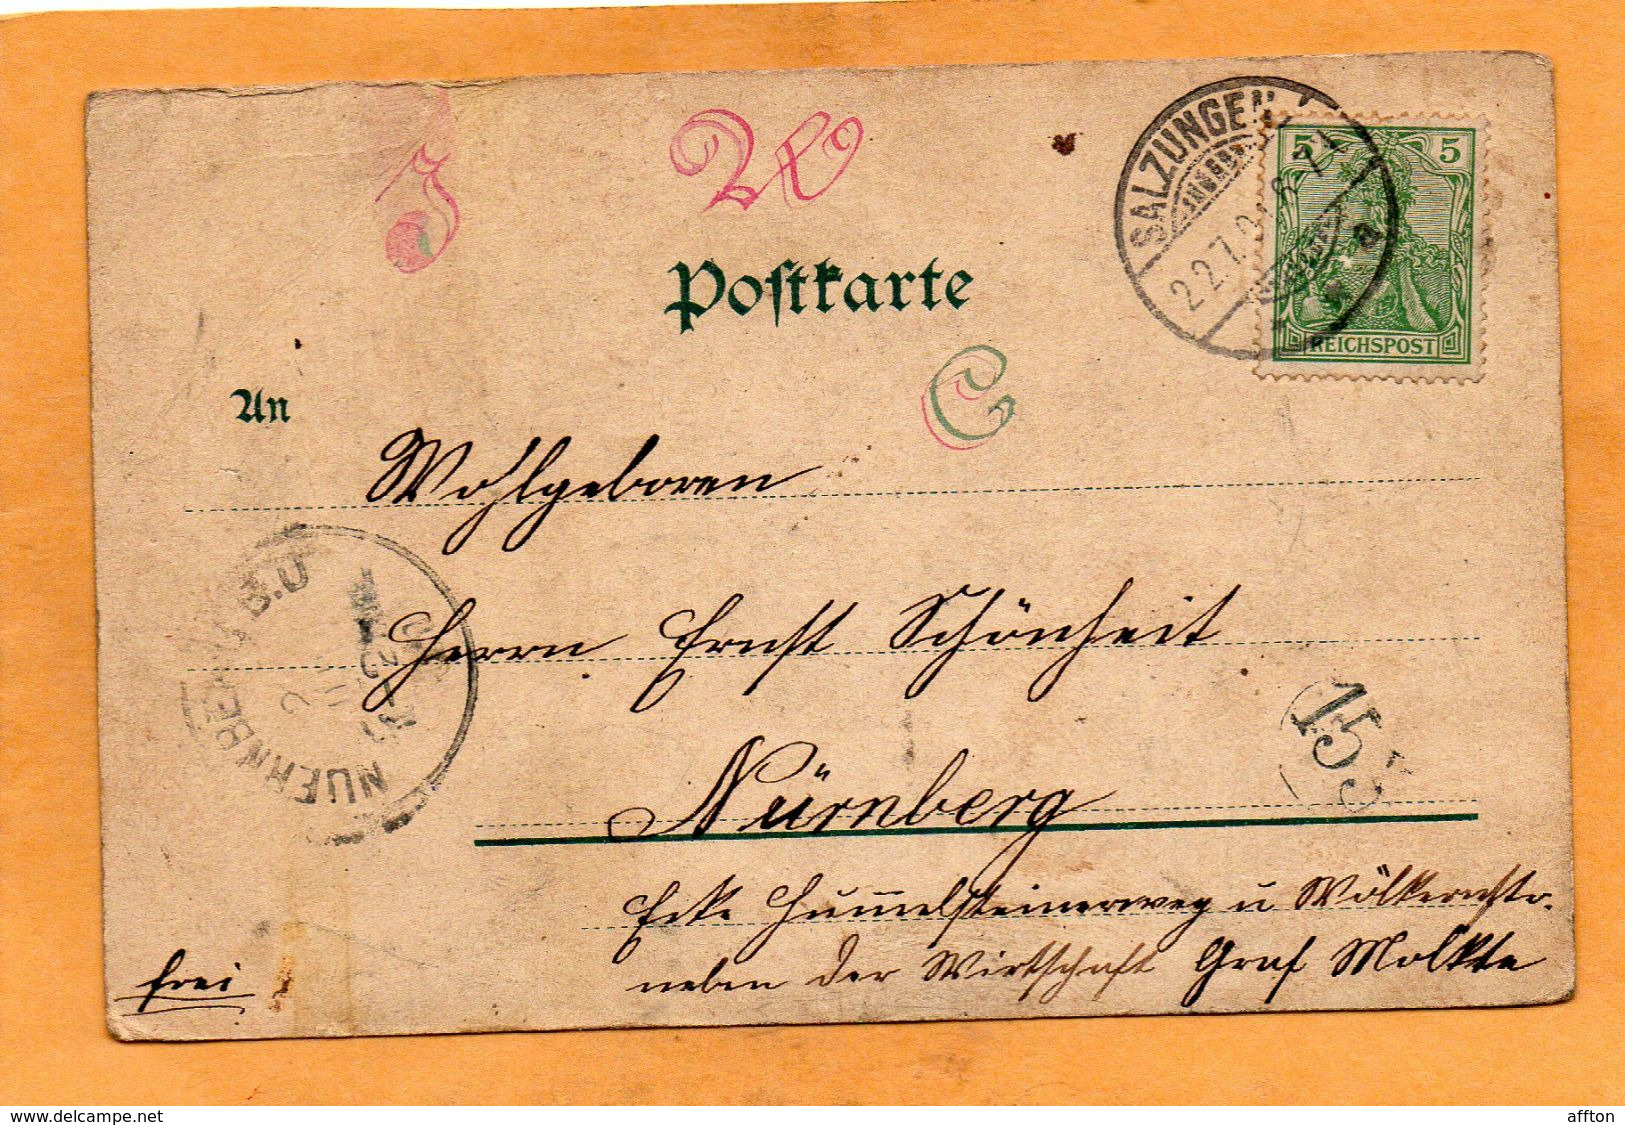 Bad Salzungen Germany 1920  Postcard - Bad Salzungen